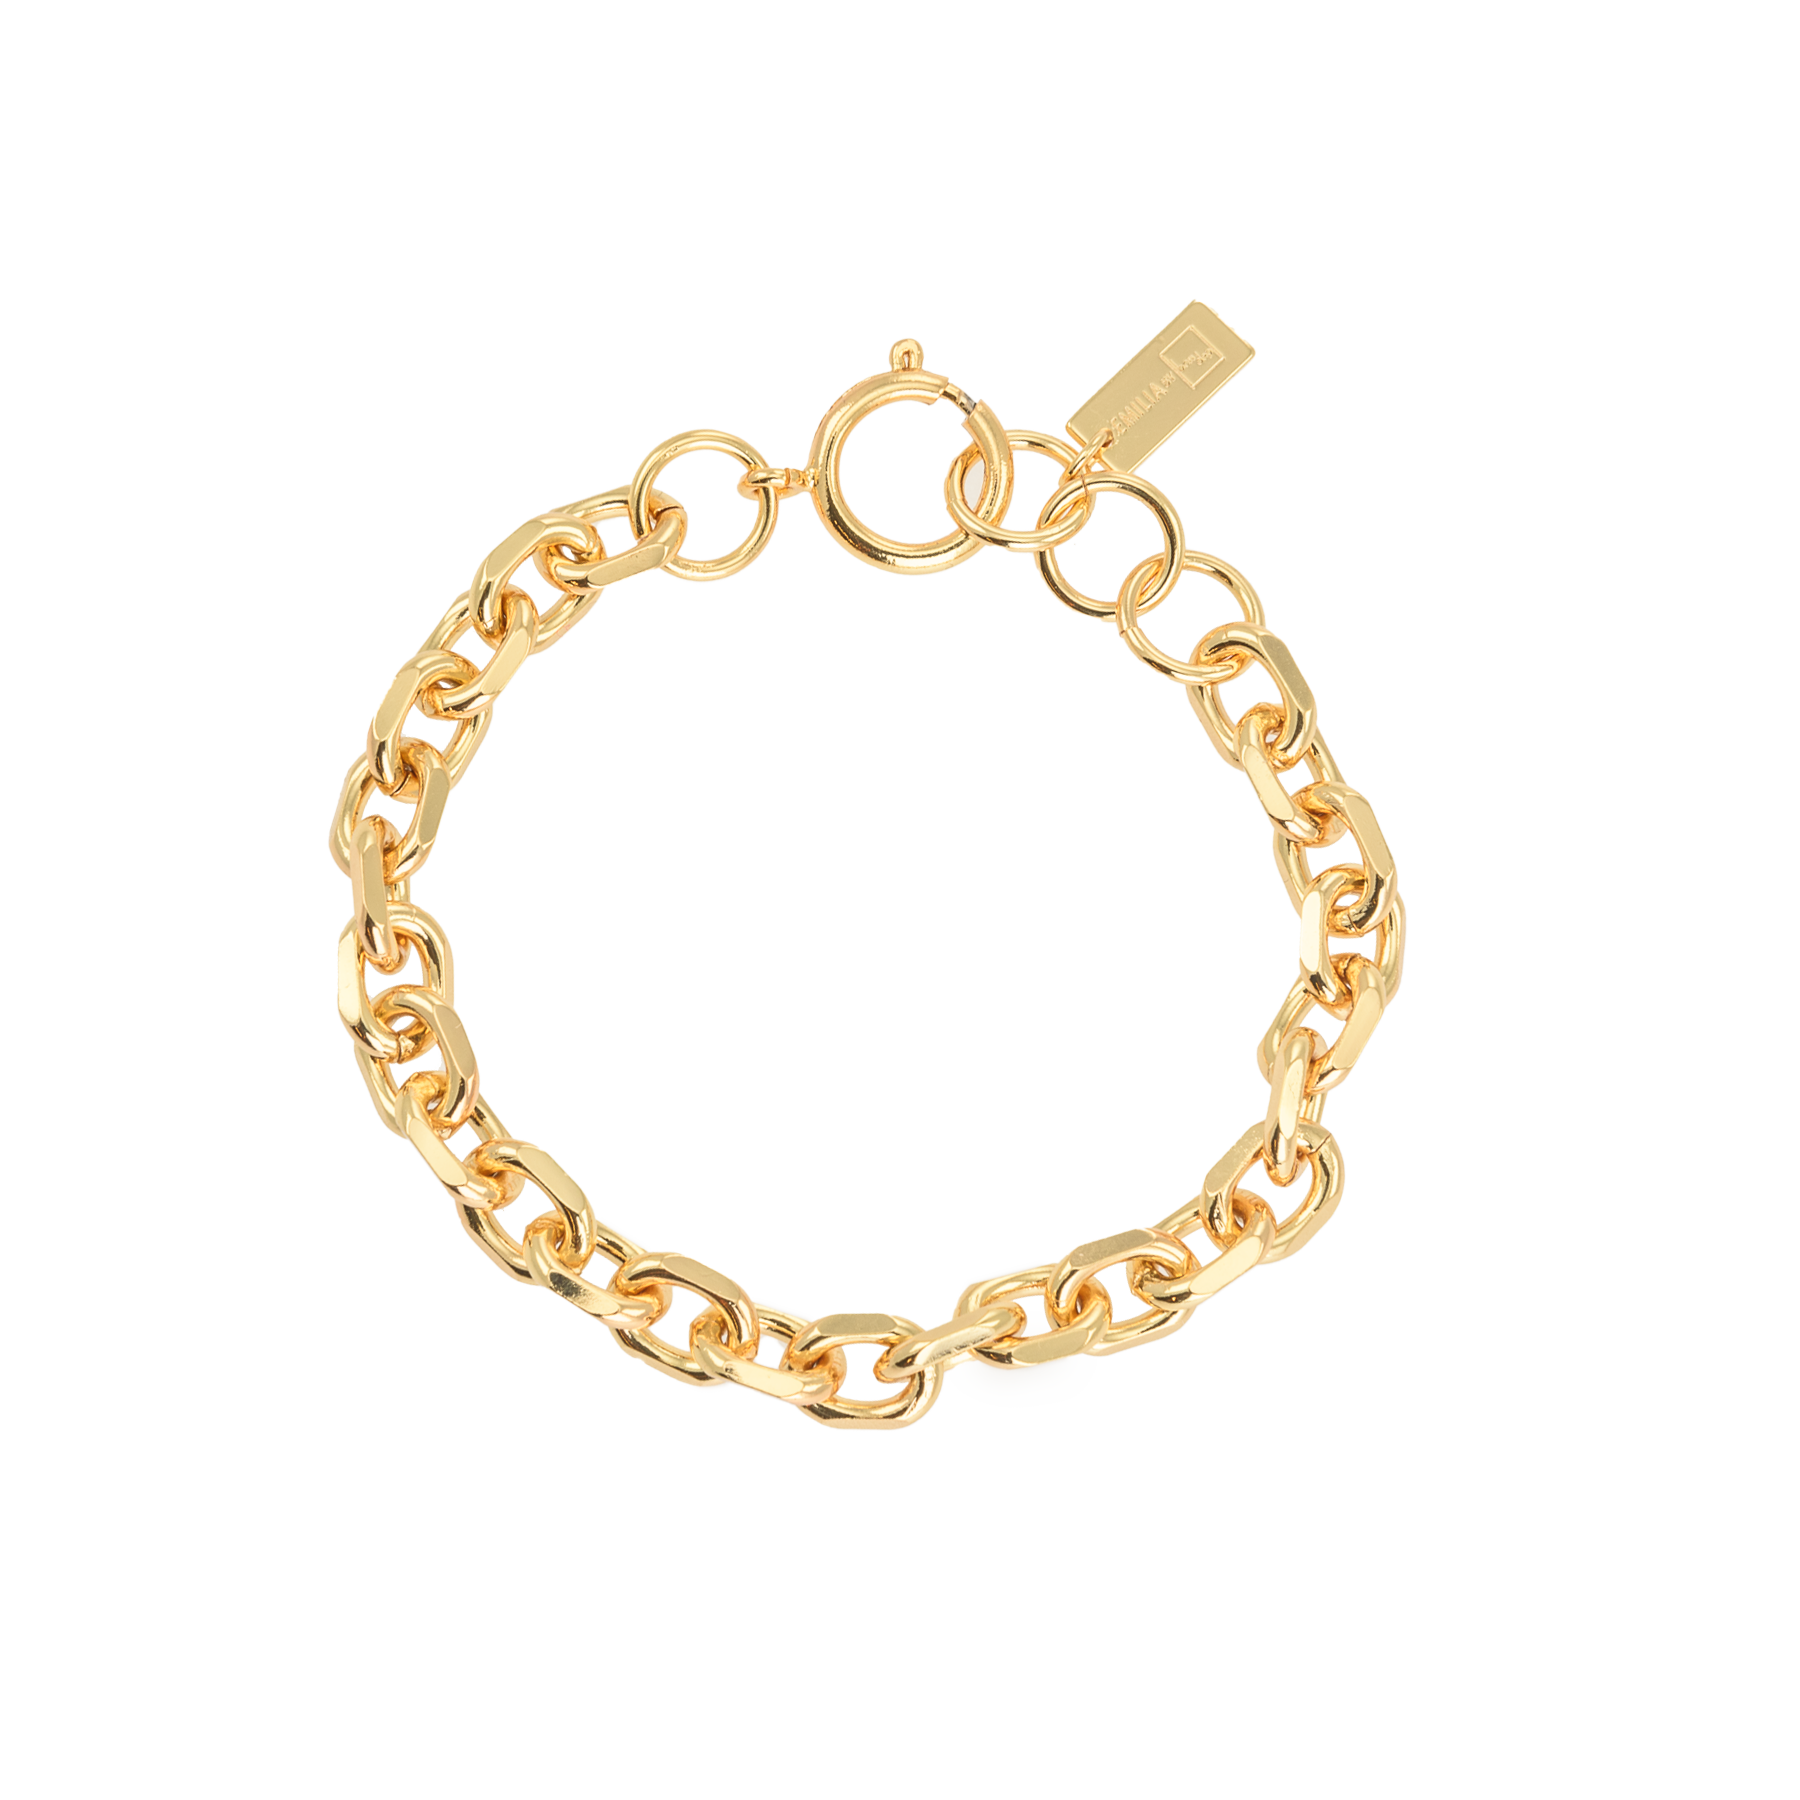 Image of Angeled chain bracelet 17 cm from Emilia by Bon Dep